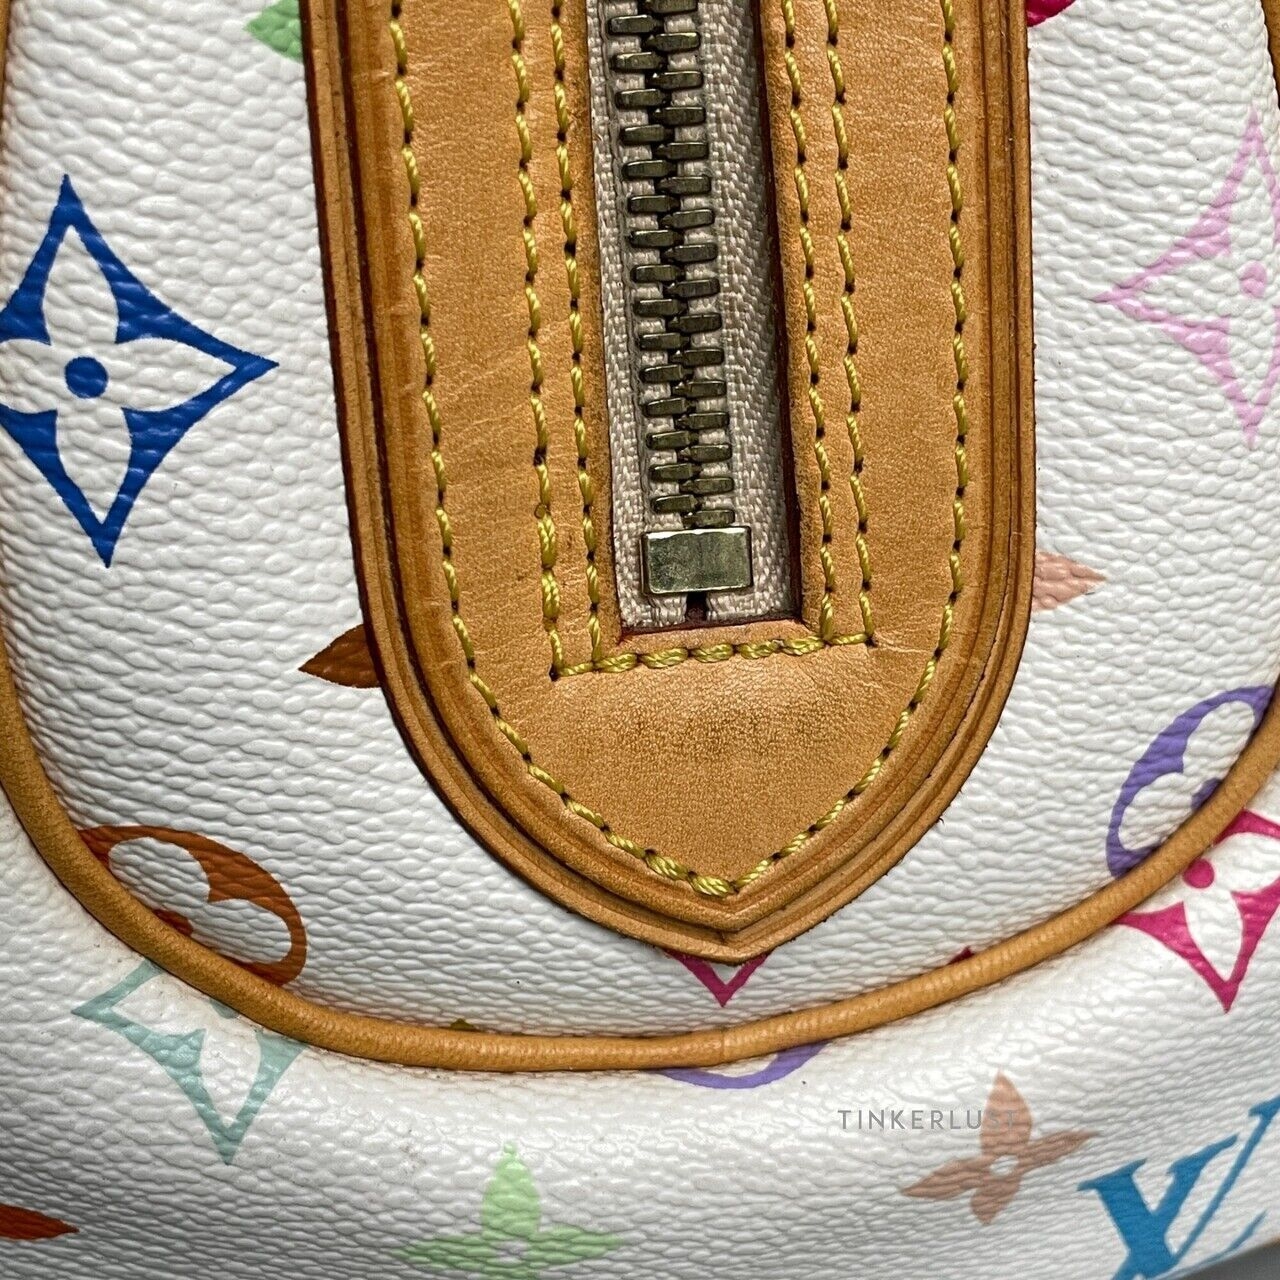 Louis Vuitton Priscilla White Multicolor Monogram Canvas Handbag